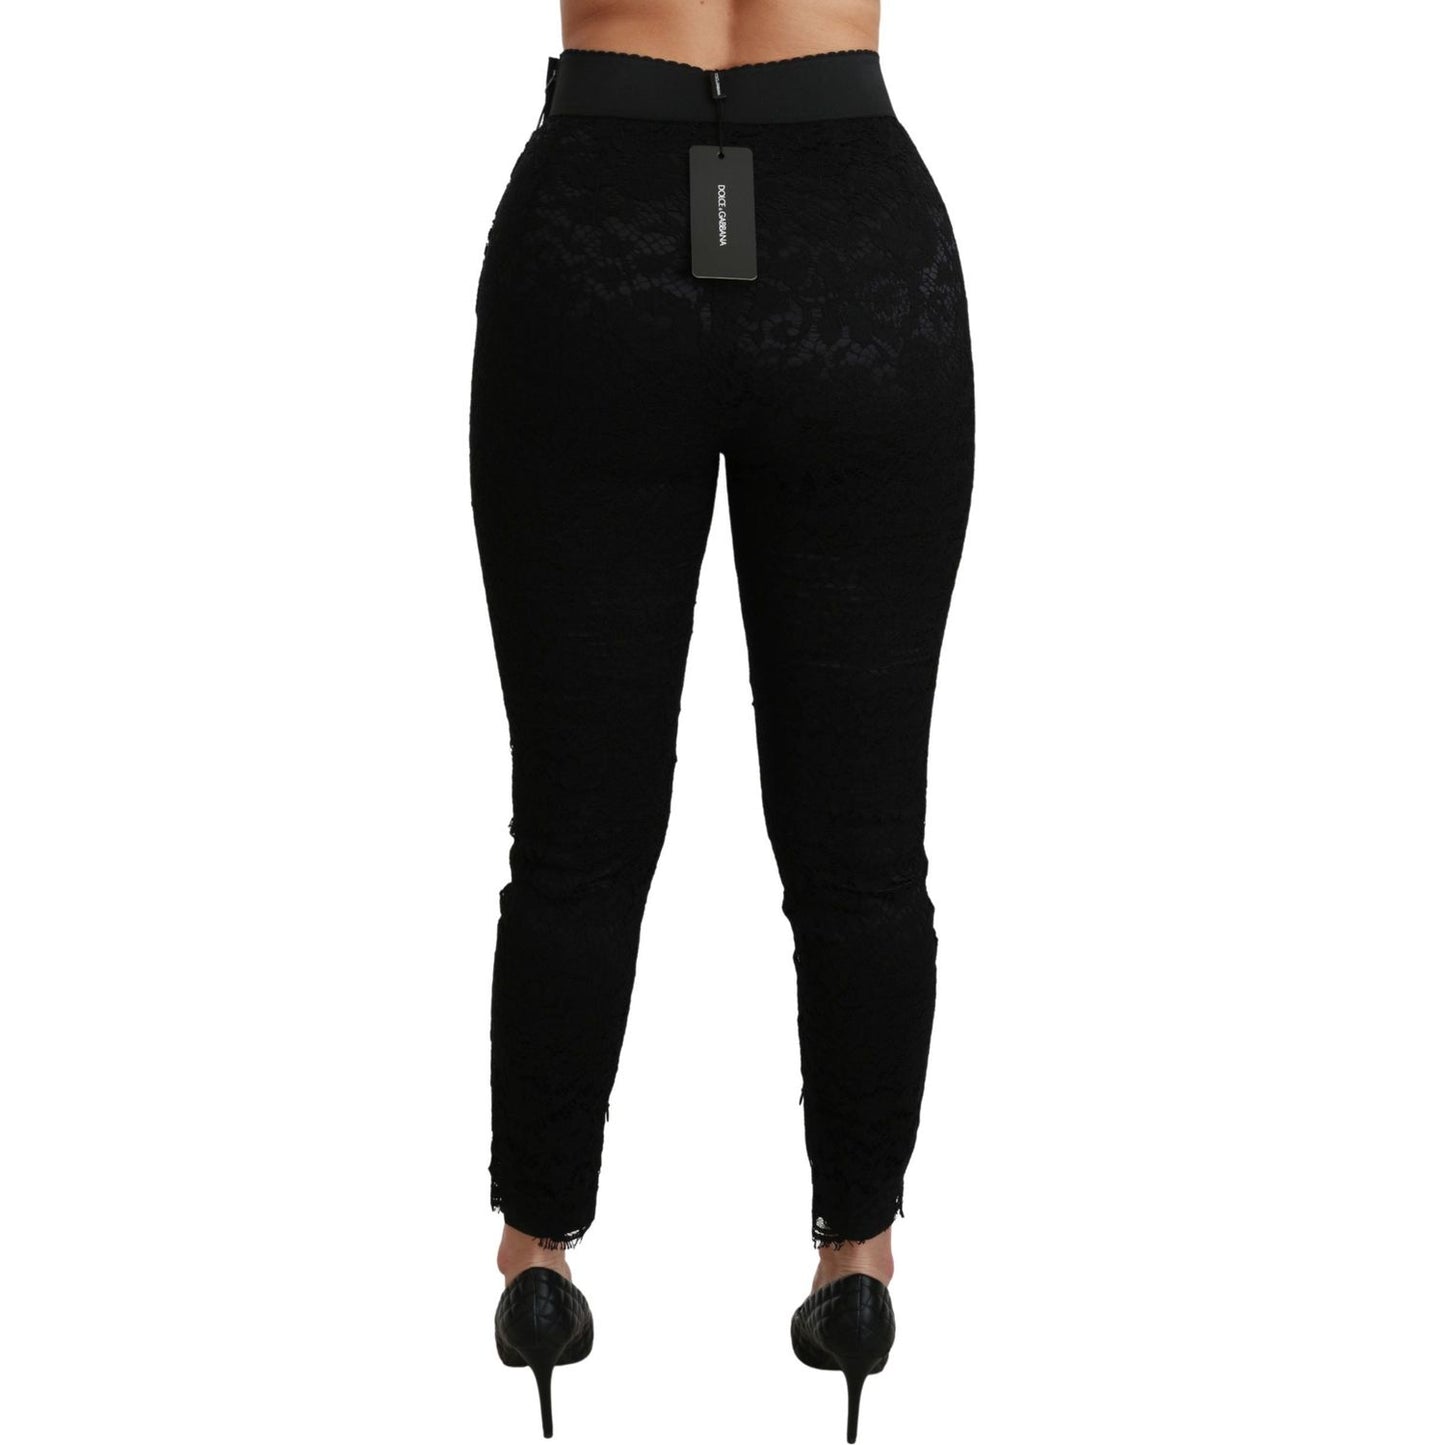 Dolce & Gabbana Elegant High Waist Lace Pants Jeans & Pants black-lace-skinny-high-waist-cotton-pants